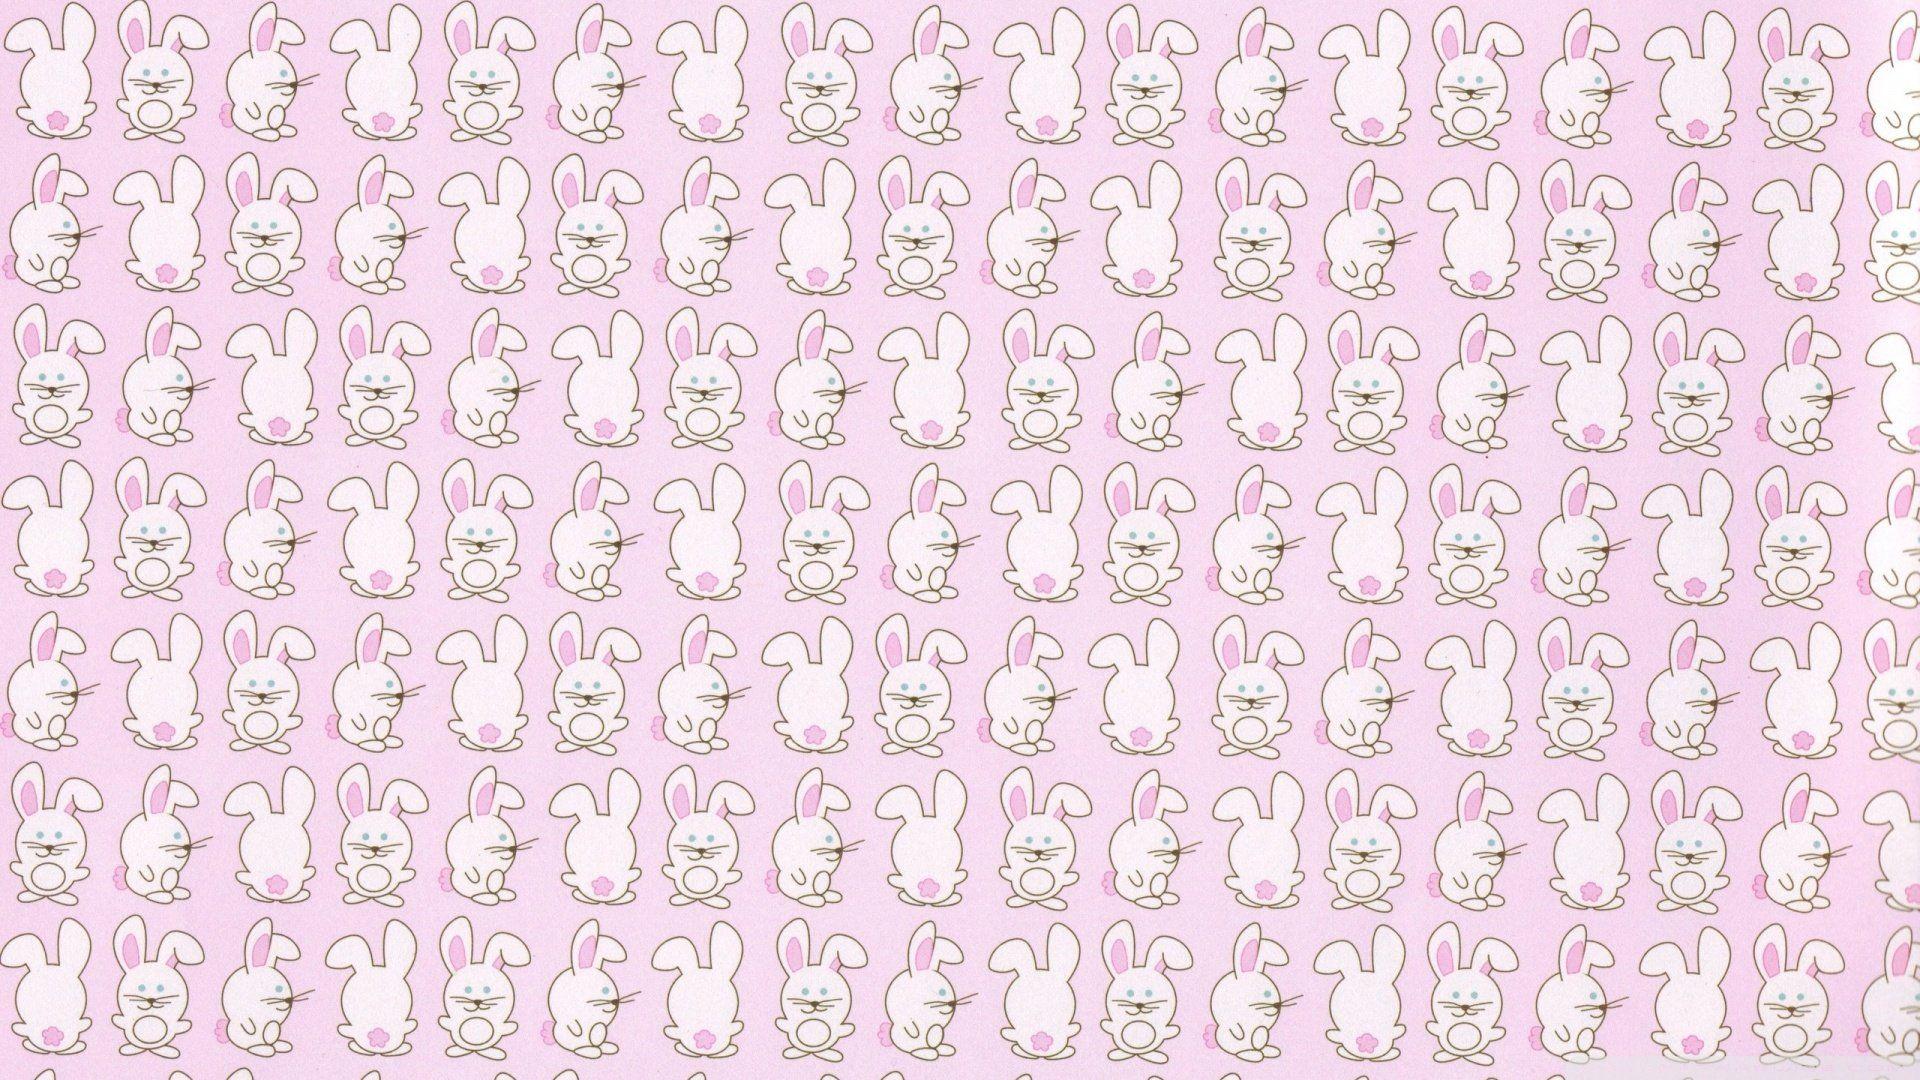 wallpaper pattern cute e111e84d15589499ebd73Df630a0f3e1 pastel